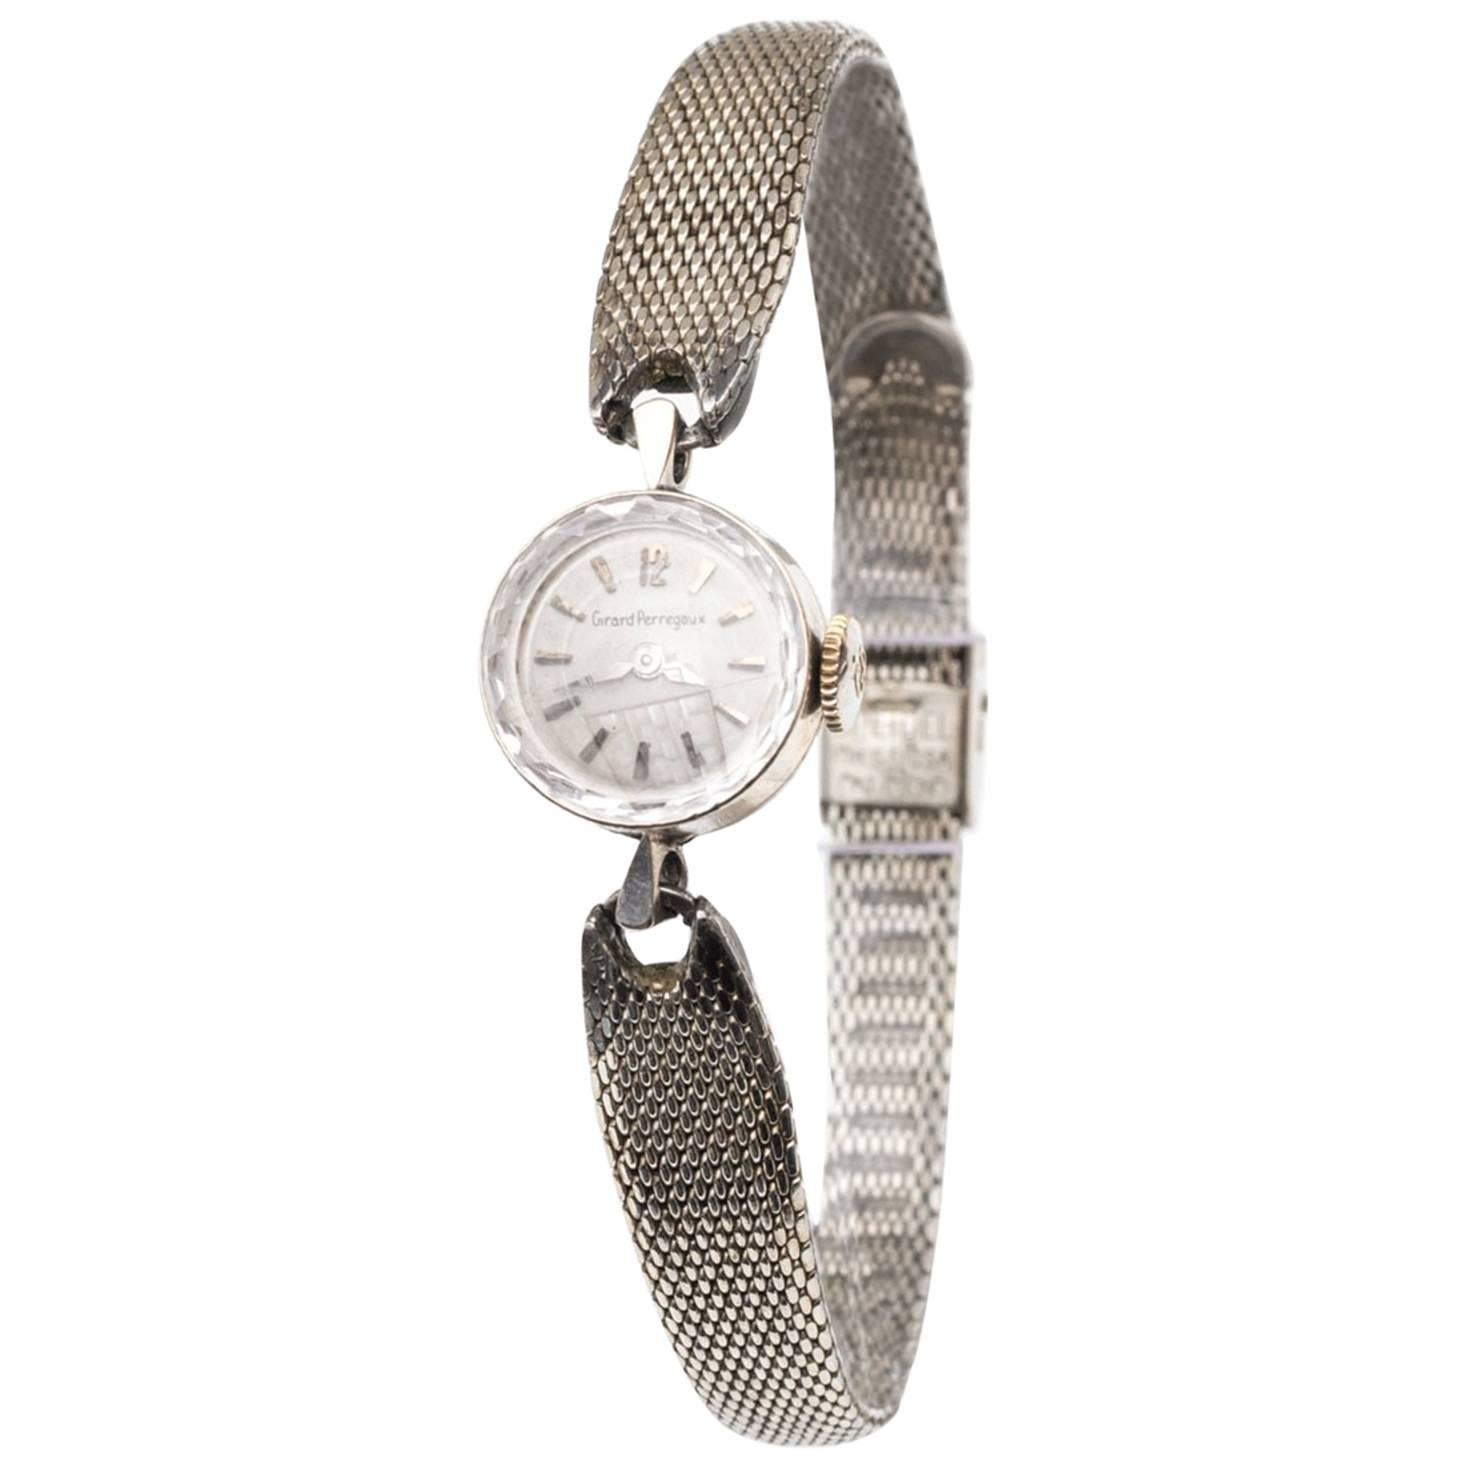 1960s Girard Perregaux Wristwatch